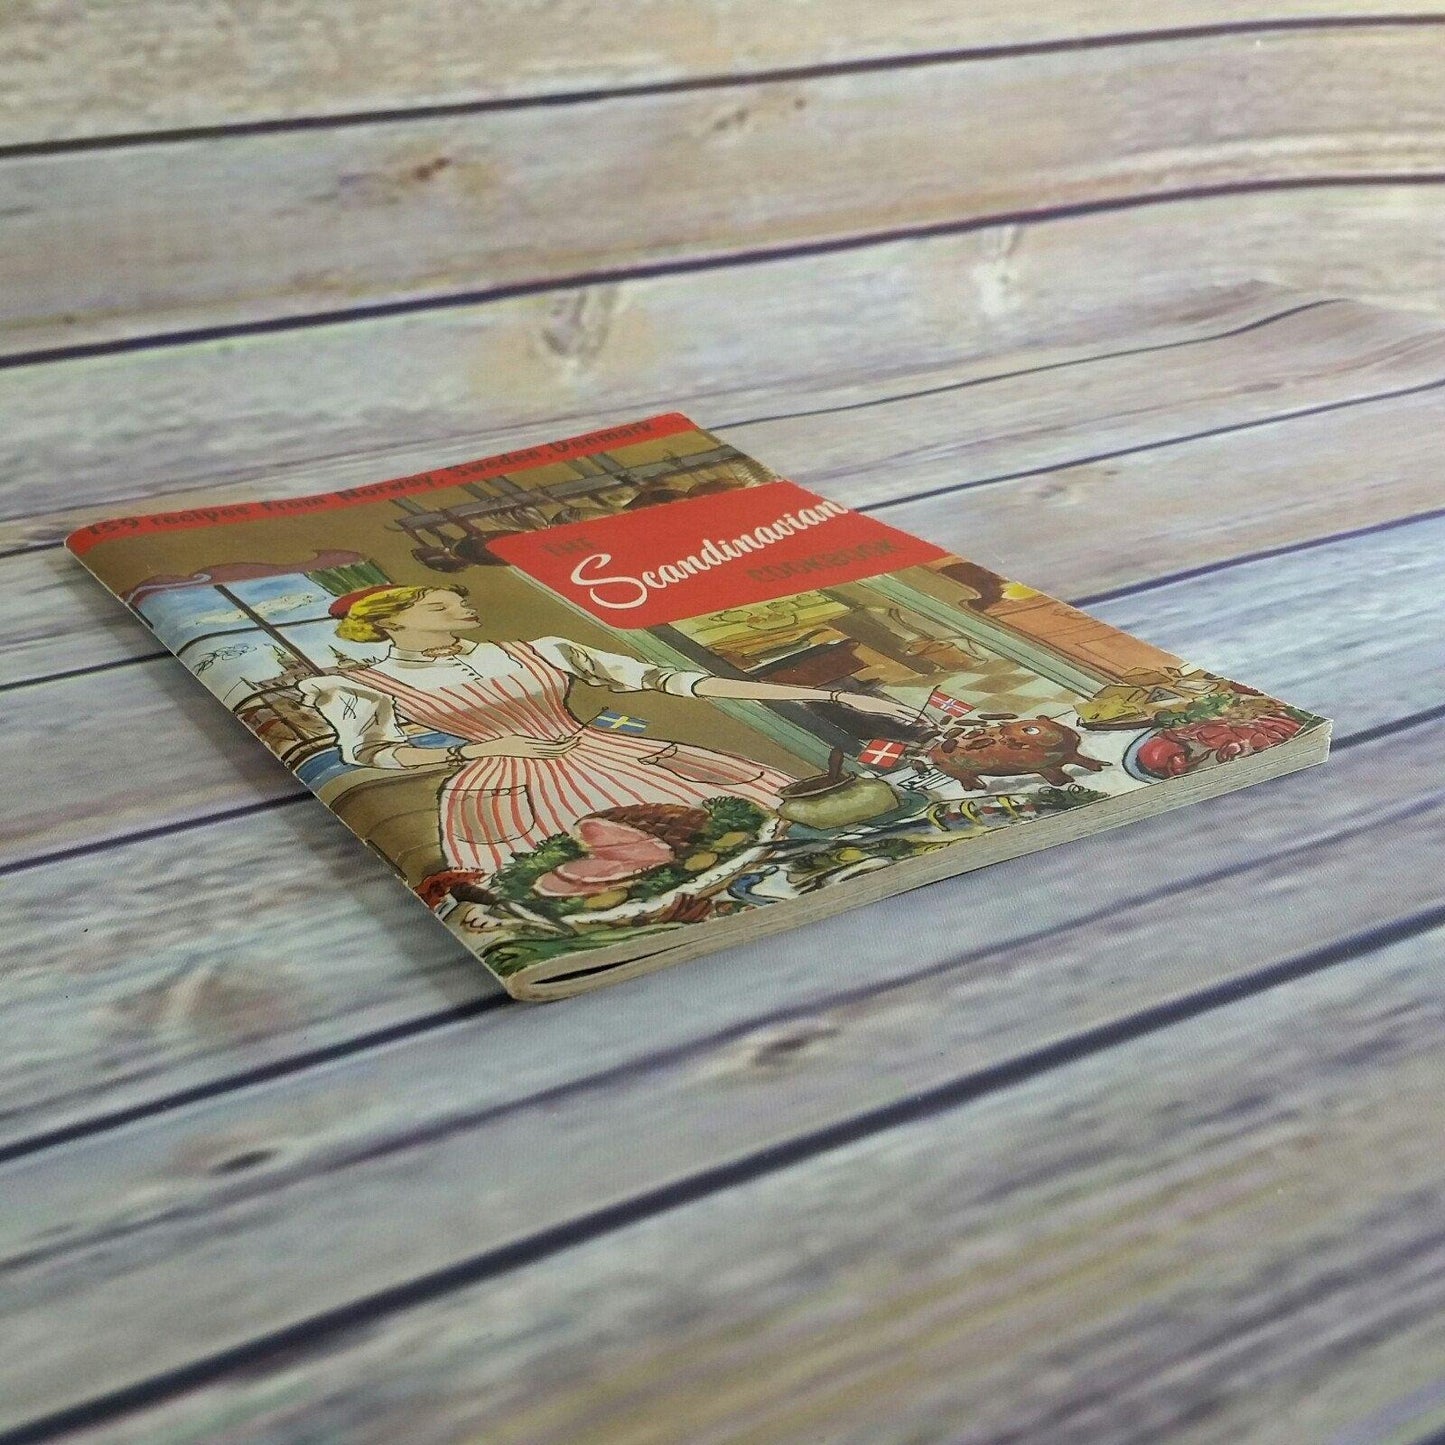 Vtg Scandinavian Cookbook Culinary Arts No 113 Norwegian Swedish and Danish Recipes 1956 Paperback Booklet